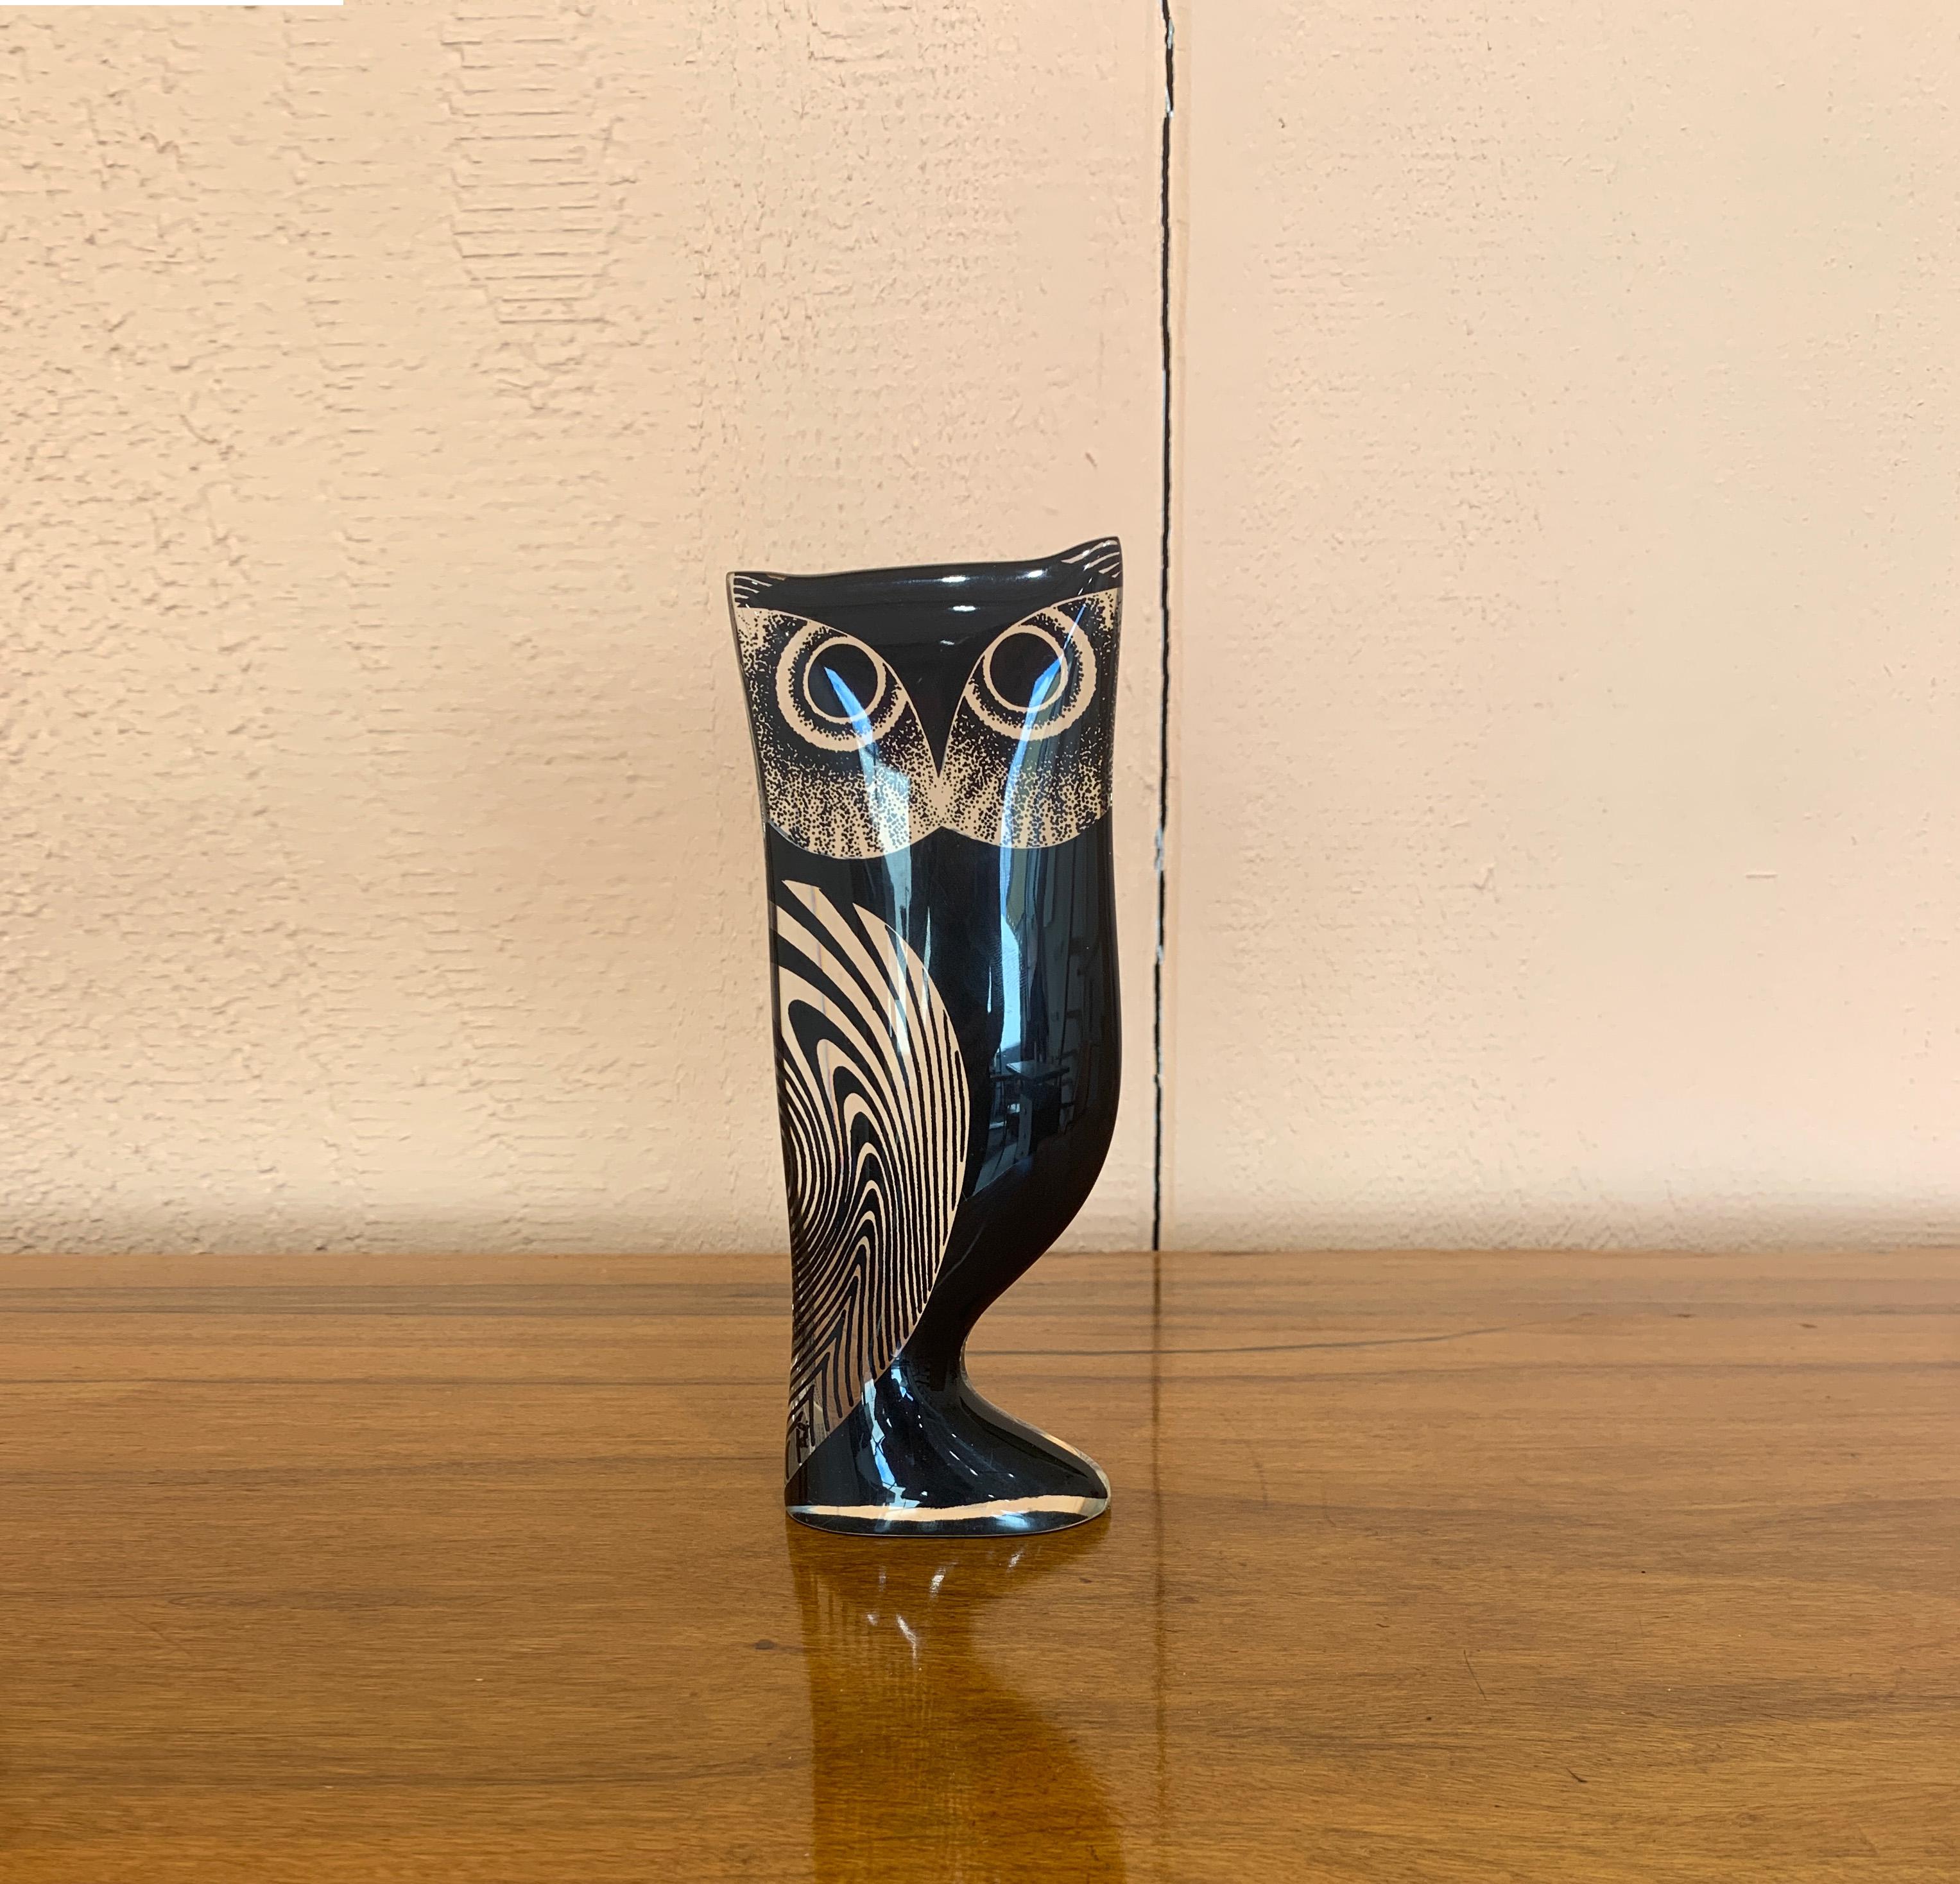 20th Century Abraham Palatnik, Owl, Kinetic sculpture in acrylic resin. Brazil, c. 1970